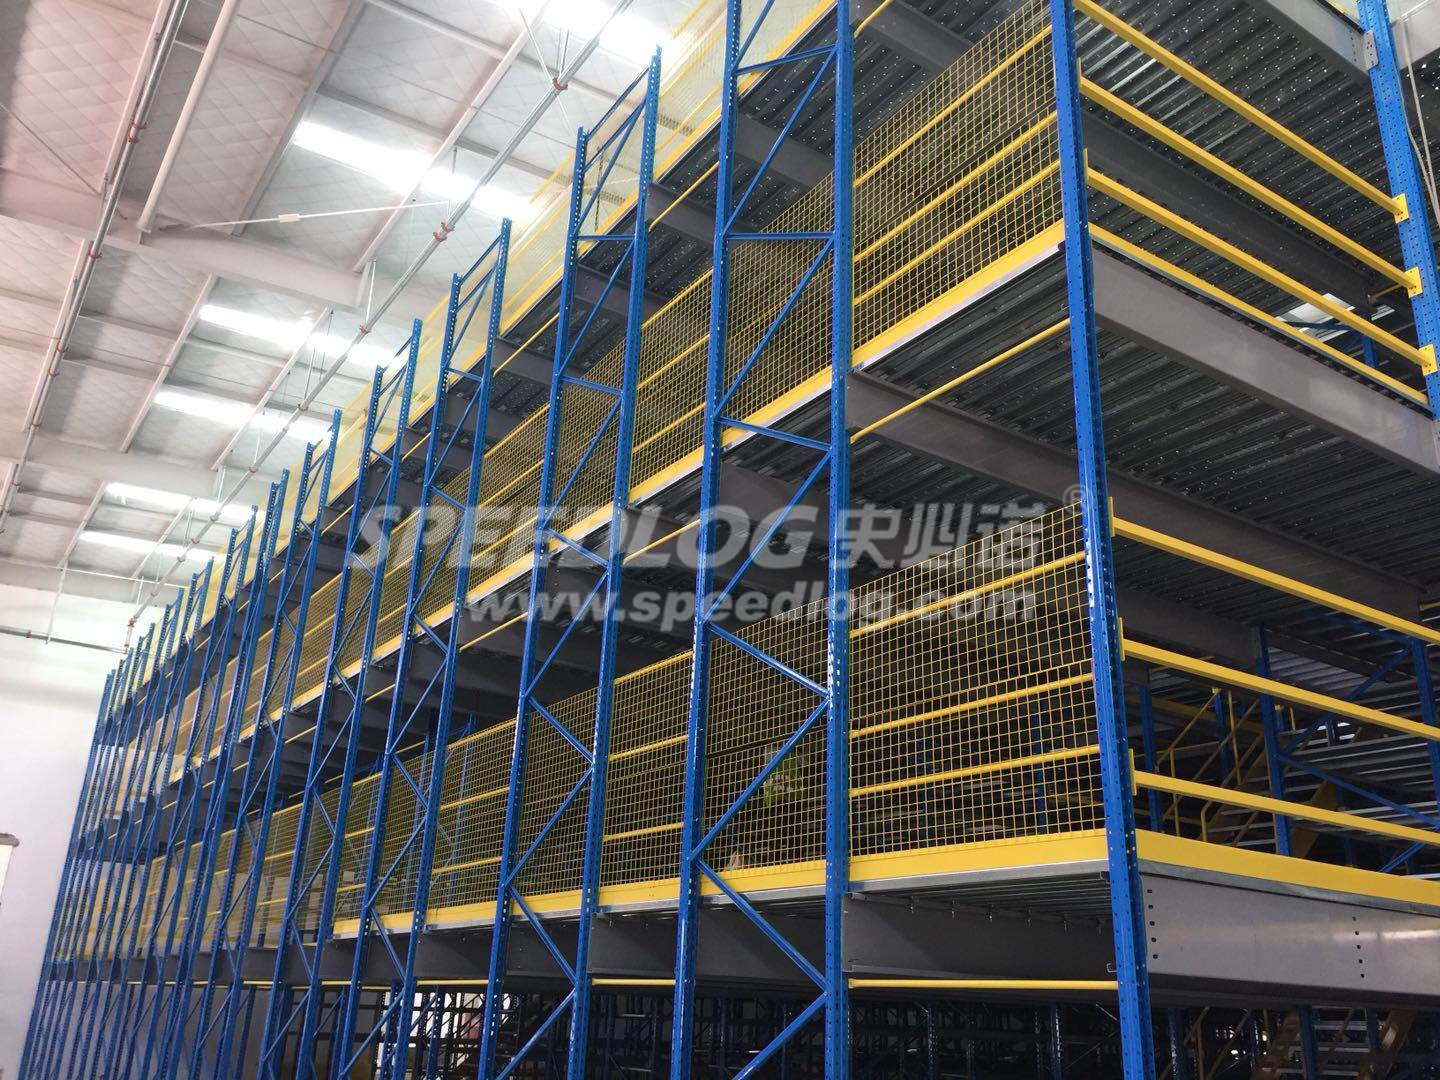 Warehouse Mezzanine Systems